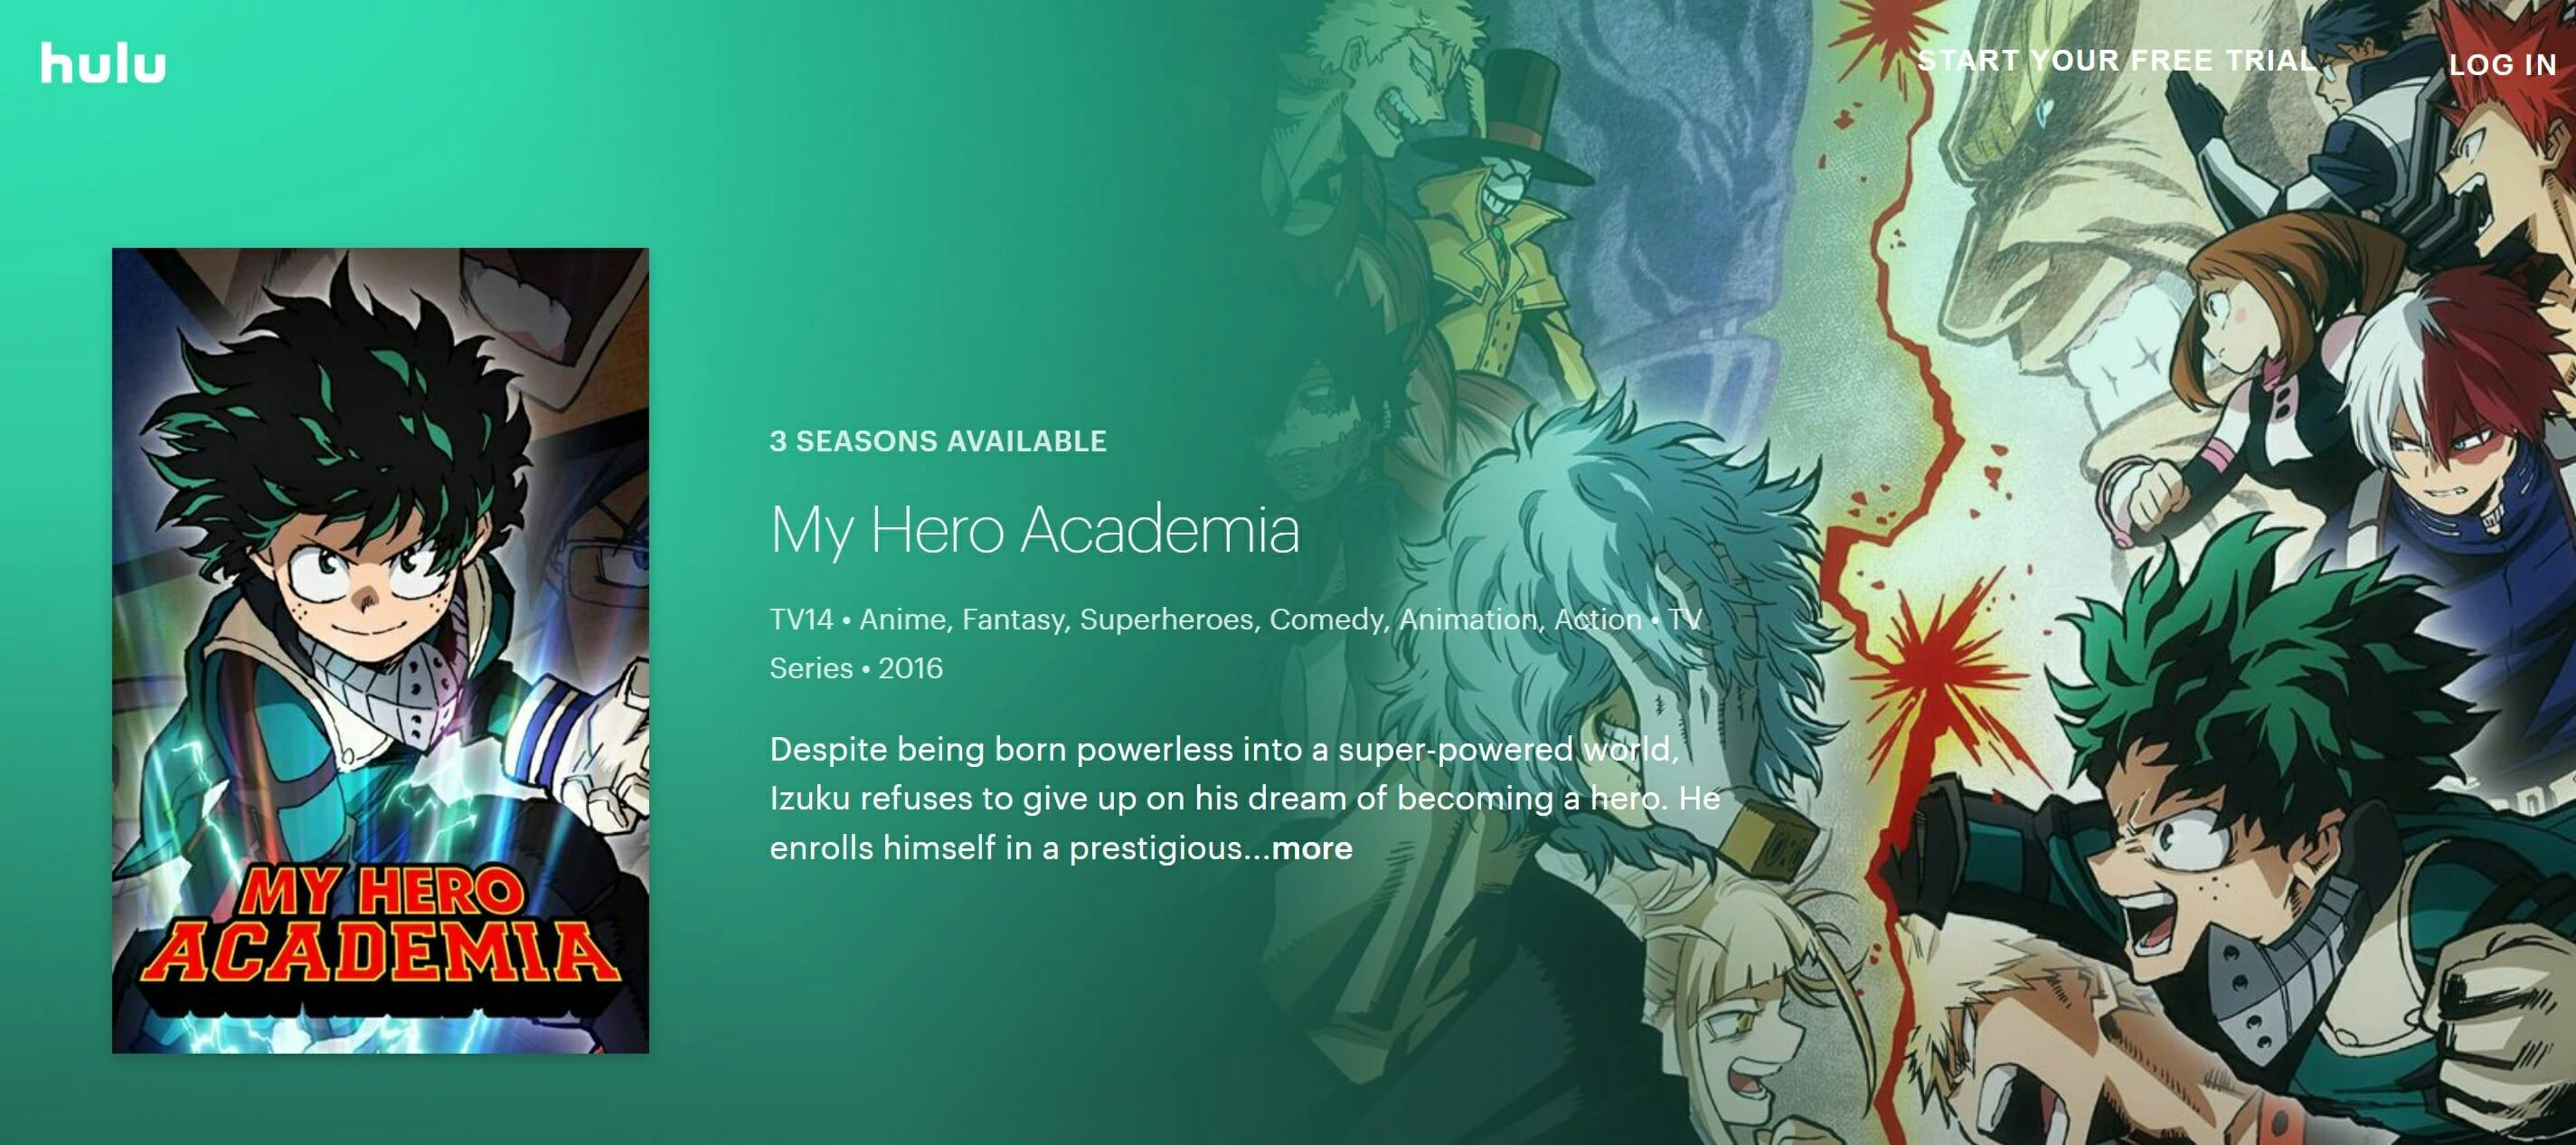 My Hero Academia - streaming tv show online